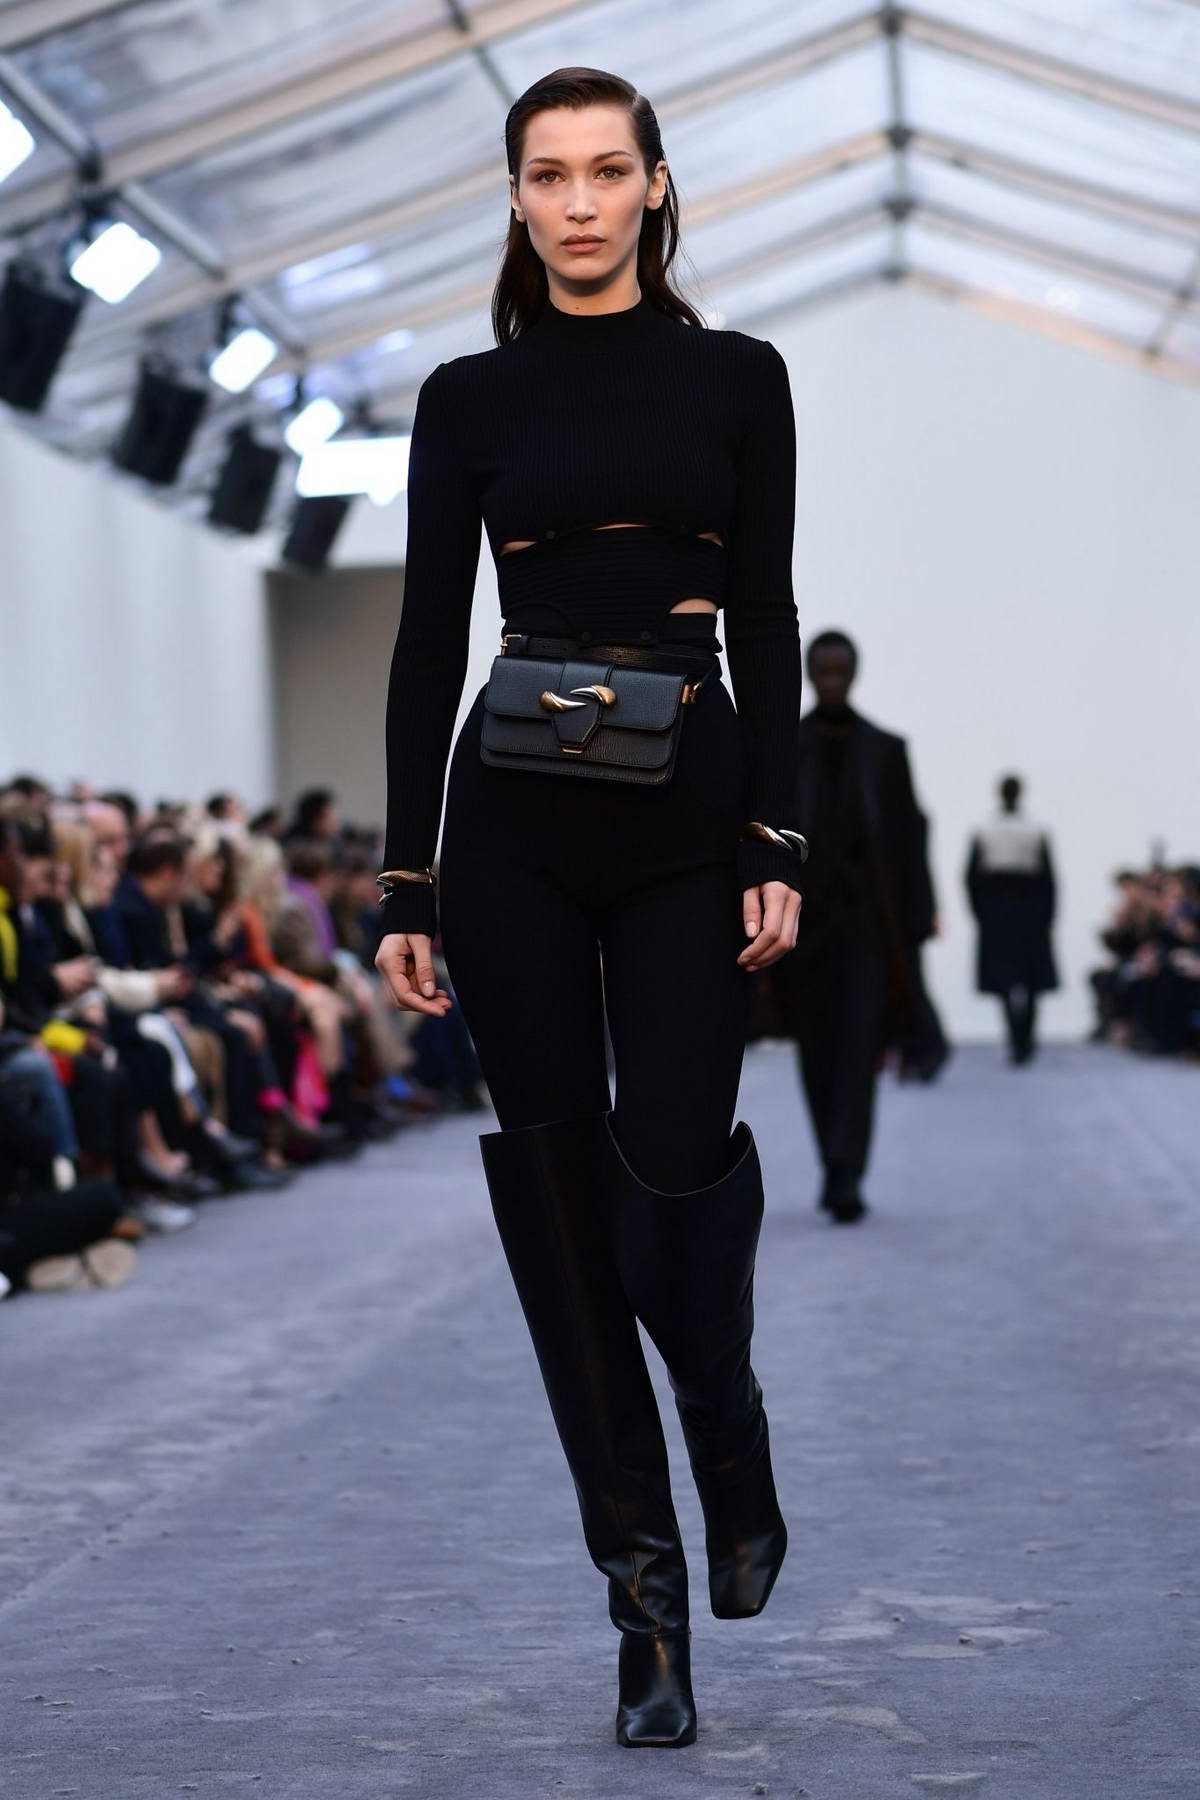 Bella Hadid walks the runway at the Roberto Cavalli Fashion Show